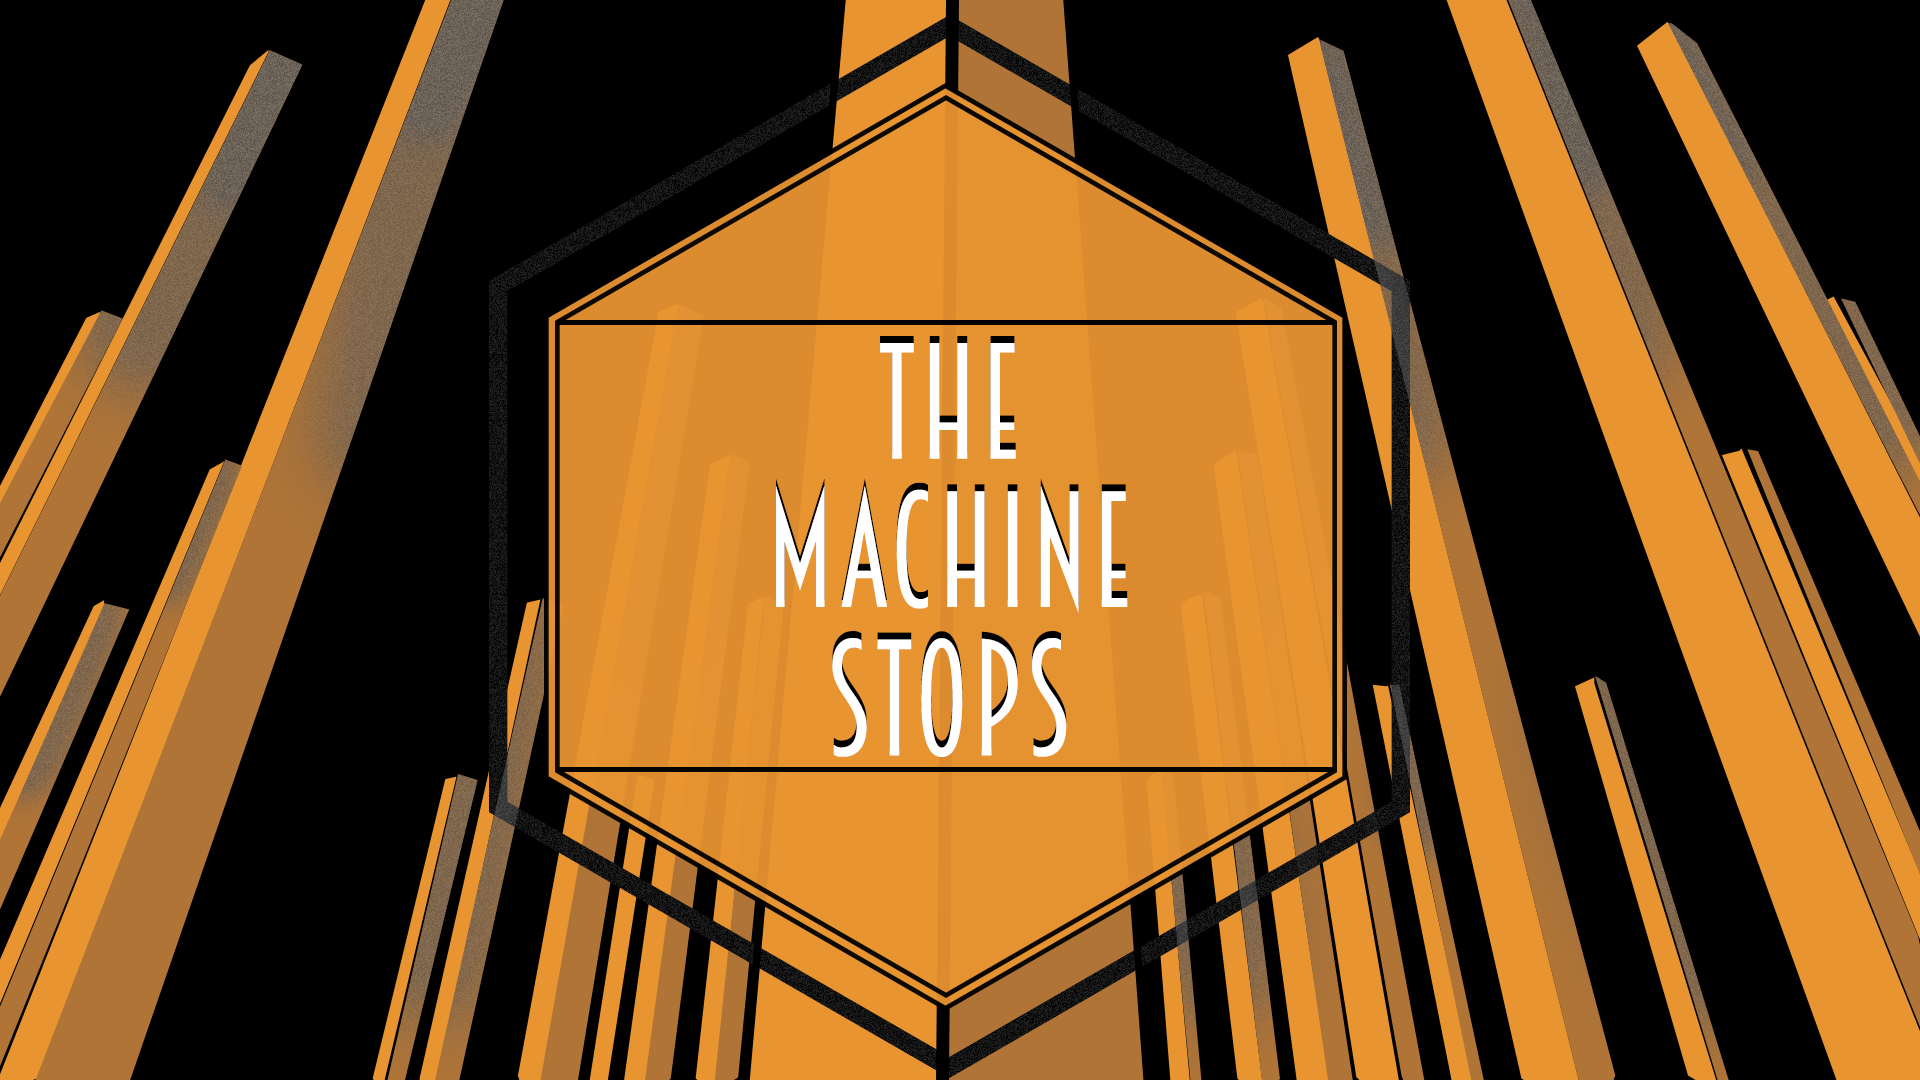 Team 6: The Machine Stops